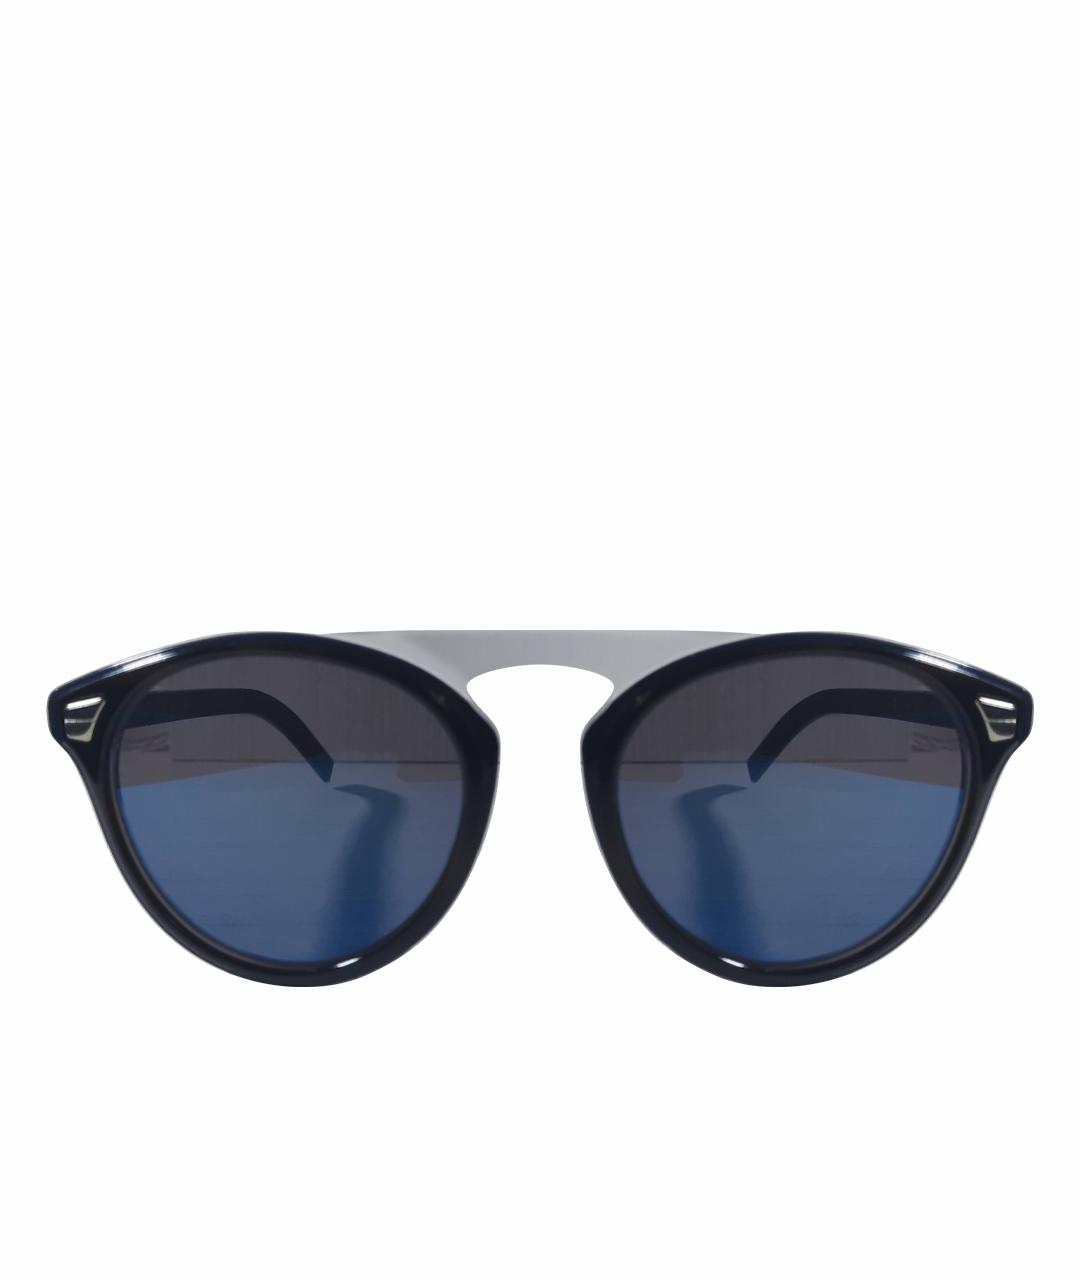 DIOR HOMME Синие пластиковые солнцезащитные очки, фото 1